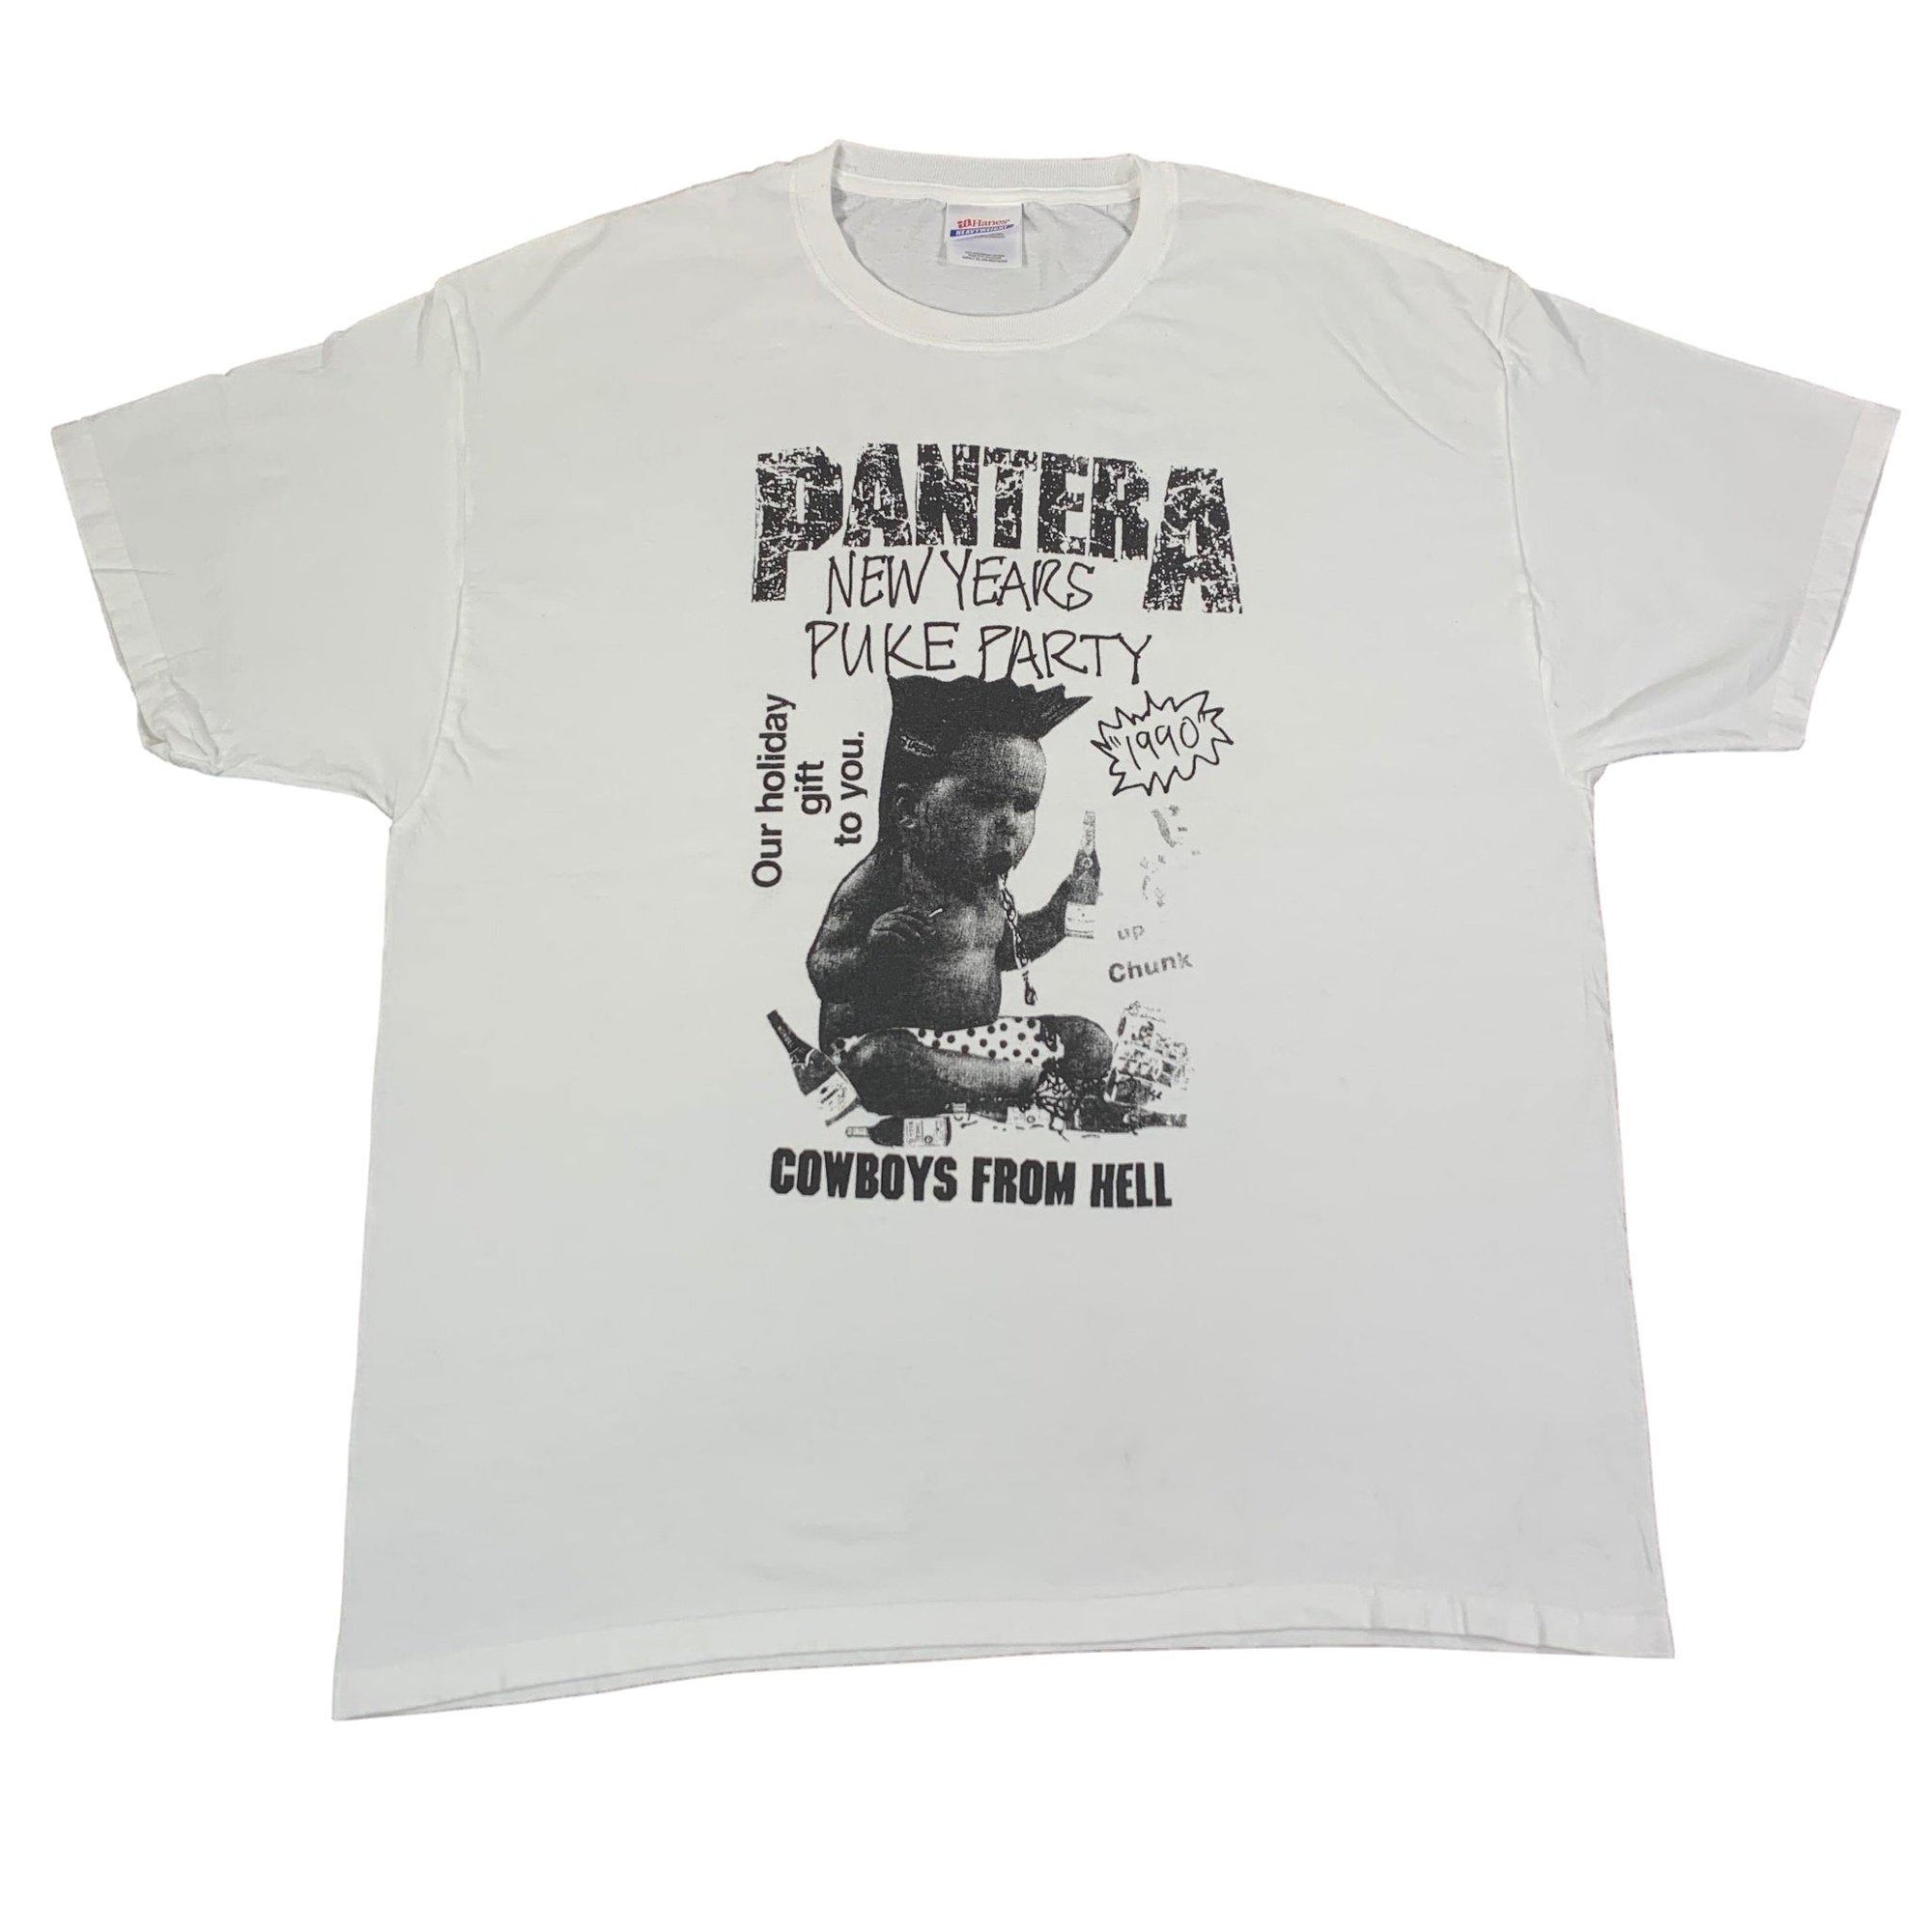 Vintage Pantera "New Years Puke Party" T-Shirt - jointcustodydc